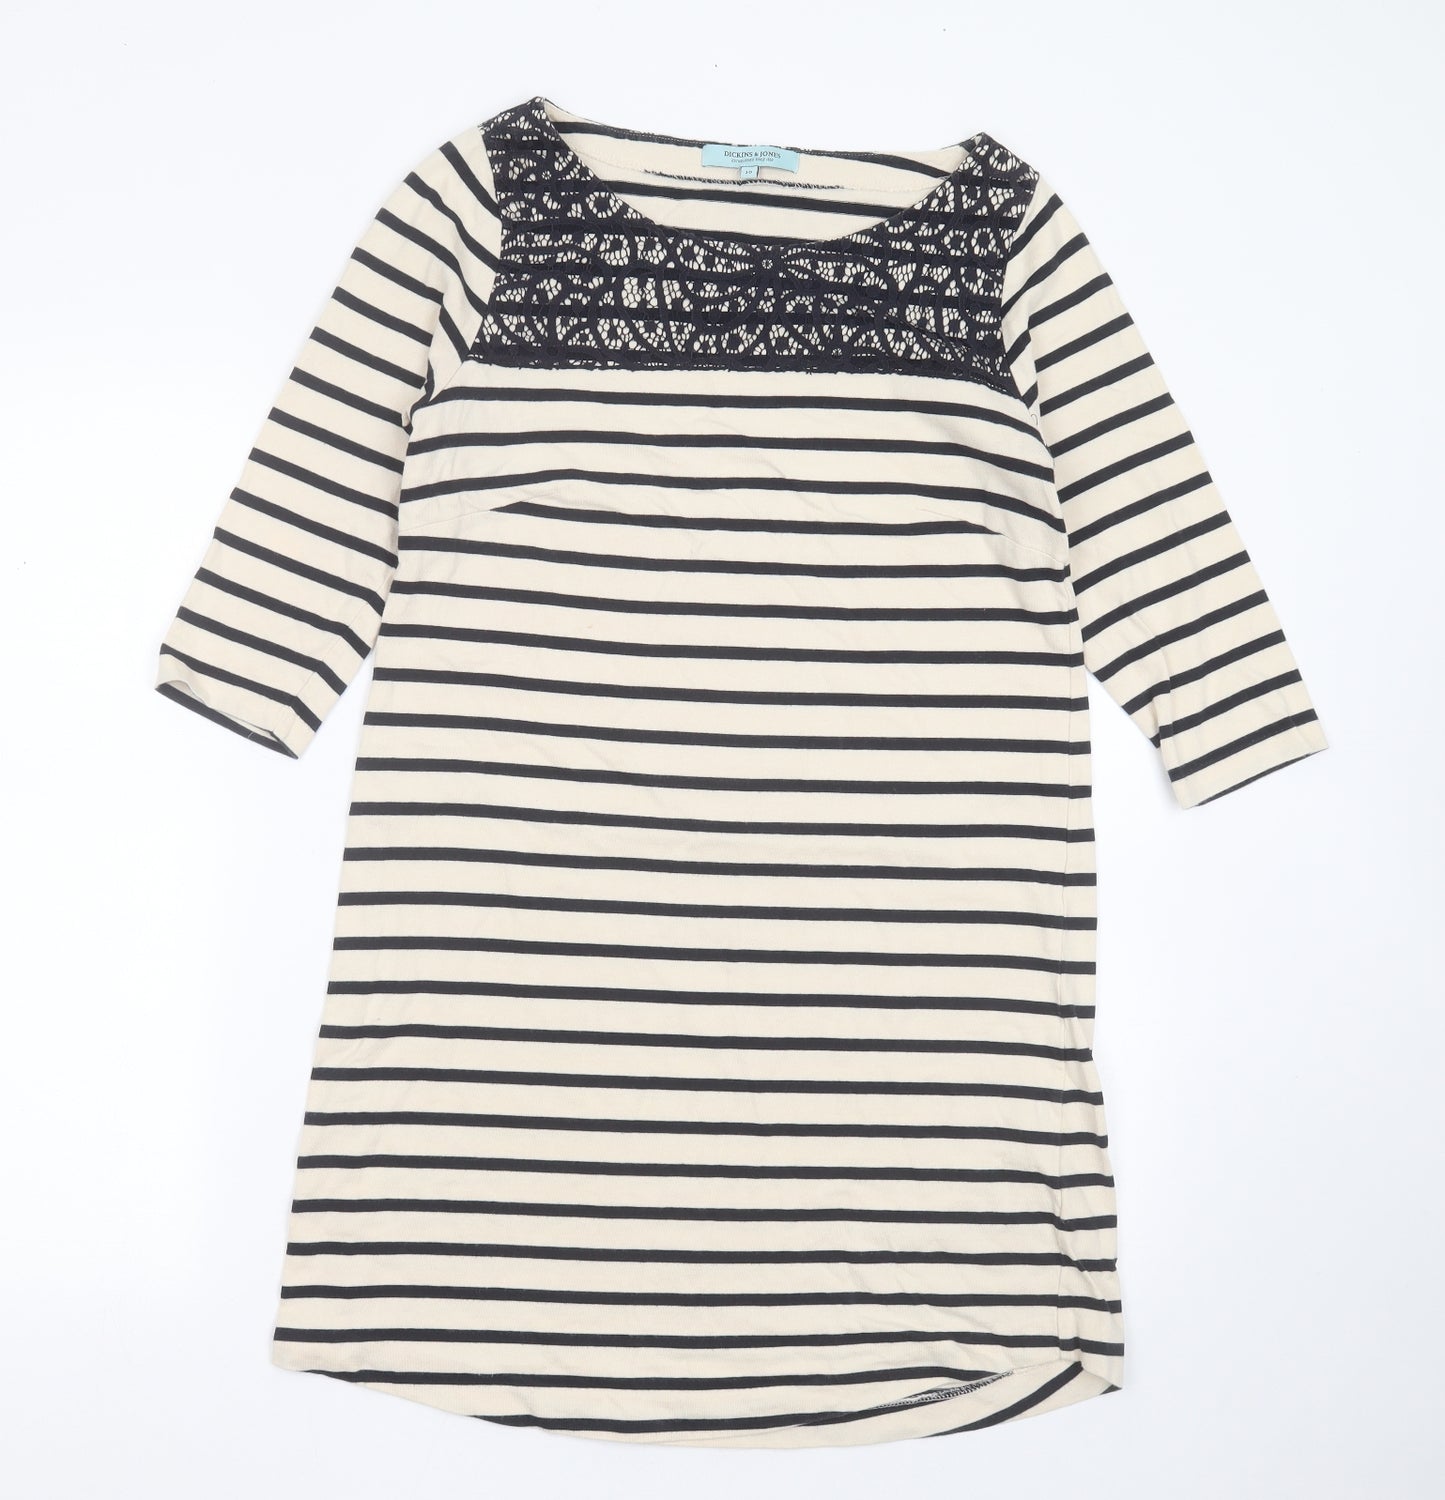 Dickins & Jones Womens Beige Striped Cotton T-Shirt Dress  Size 10  Round Neck  - Lace detail